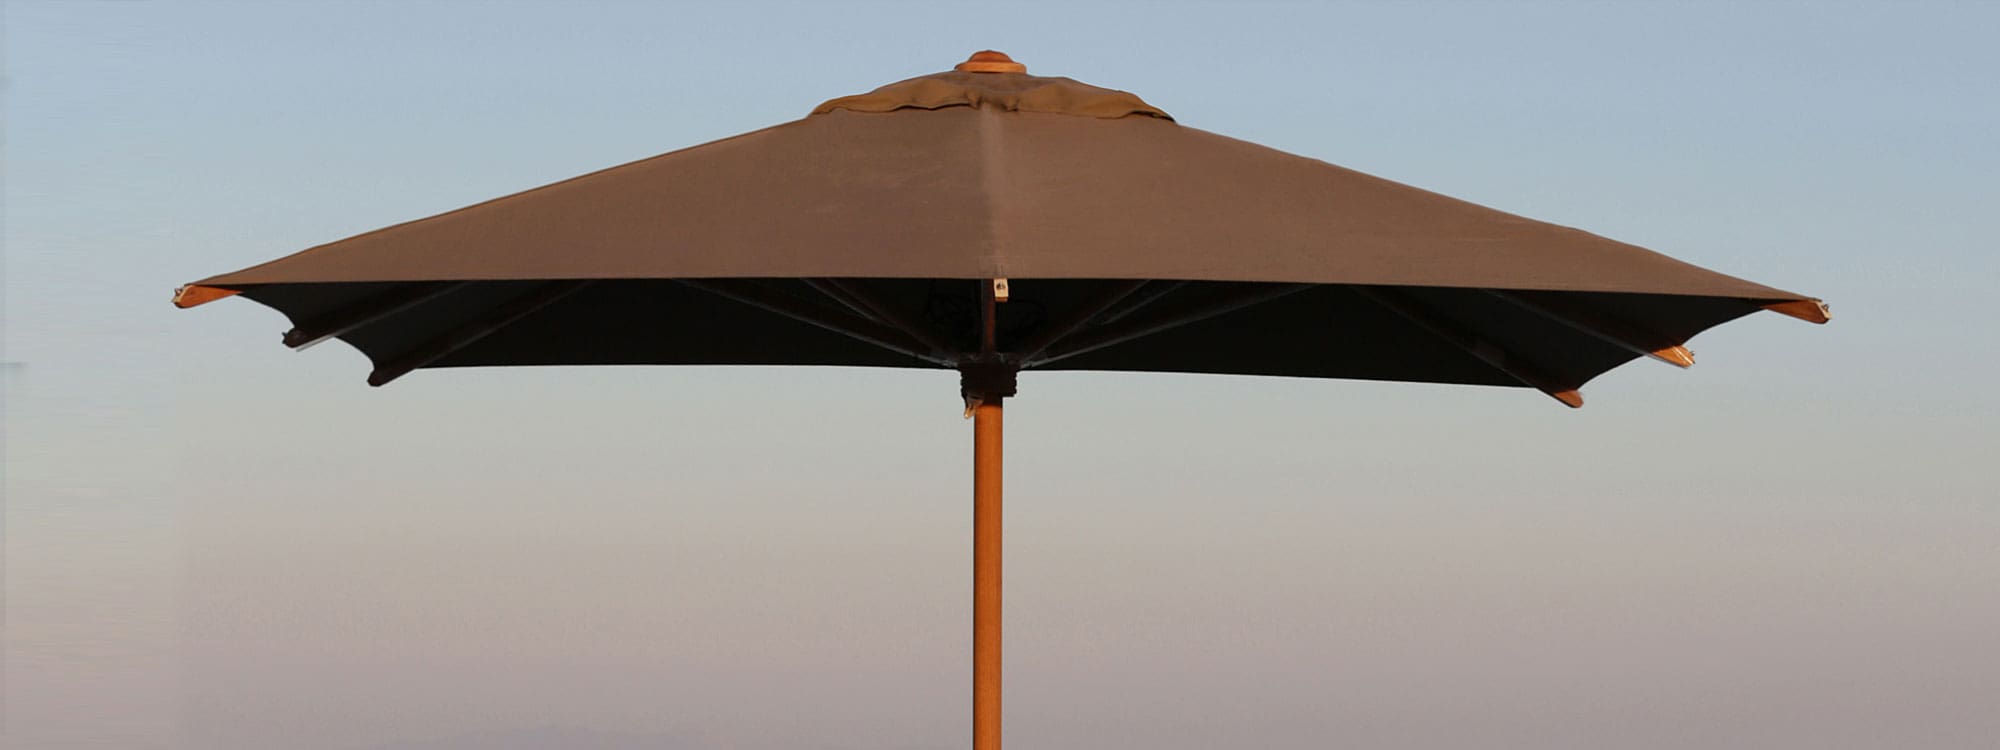 Image of Shady teak parasol by Royal Botania against sky at dusk